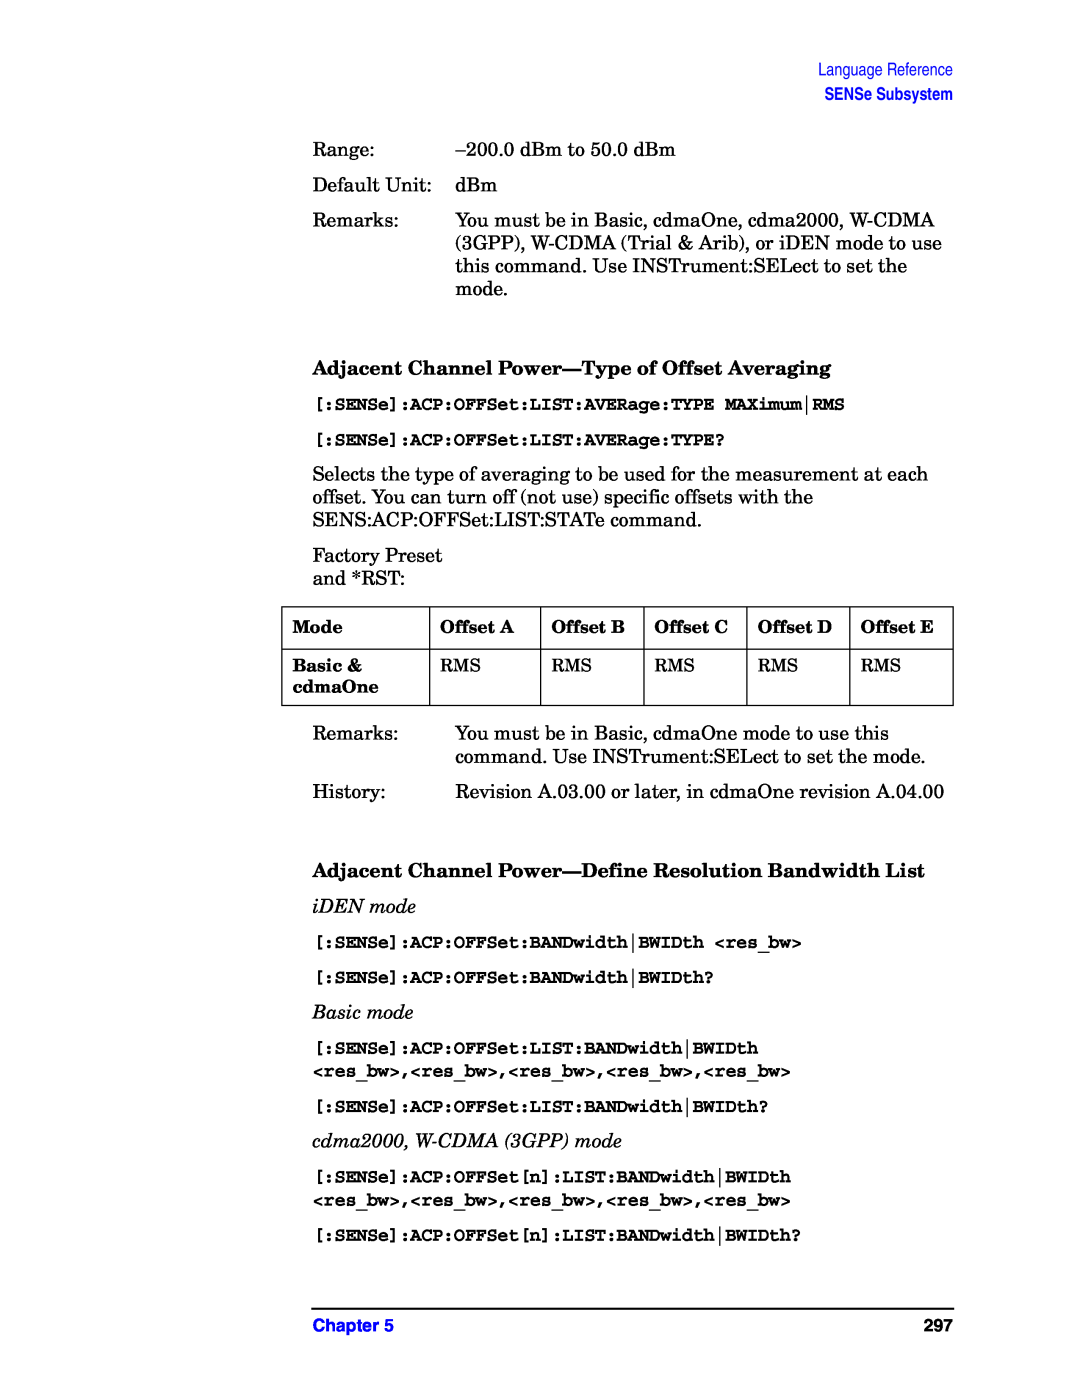 Agilent Technologies E4406A VSA manual Adjacent Channel Power—Typeof Offset Averaging, SENSe:ACP:OFFSet:LIST:AVERage:TYPE? 